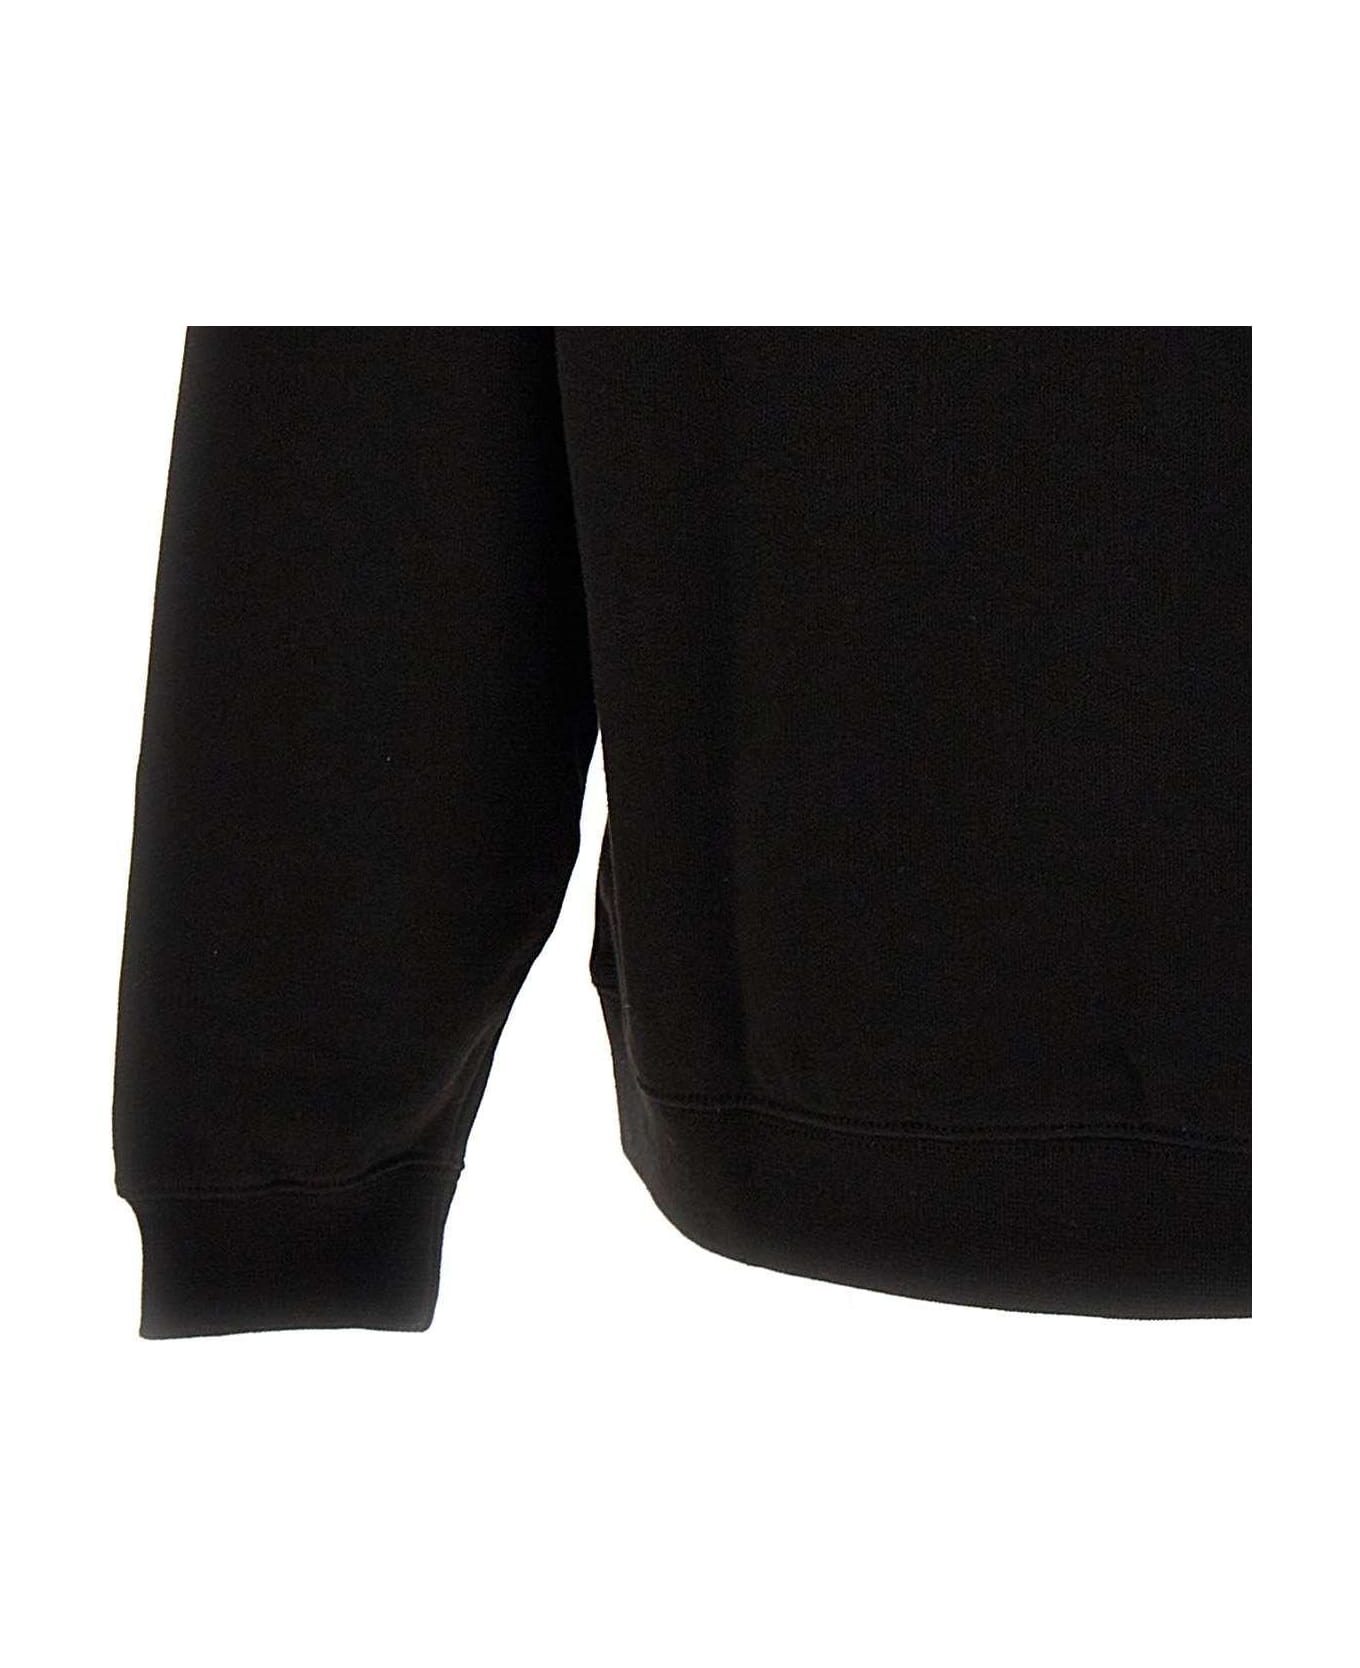 Kenzo Logo Patch Drop-shoulder Sweatshirt - Black フリース